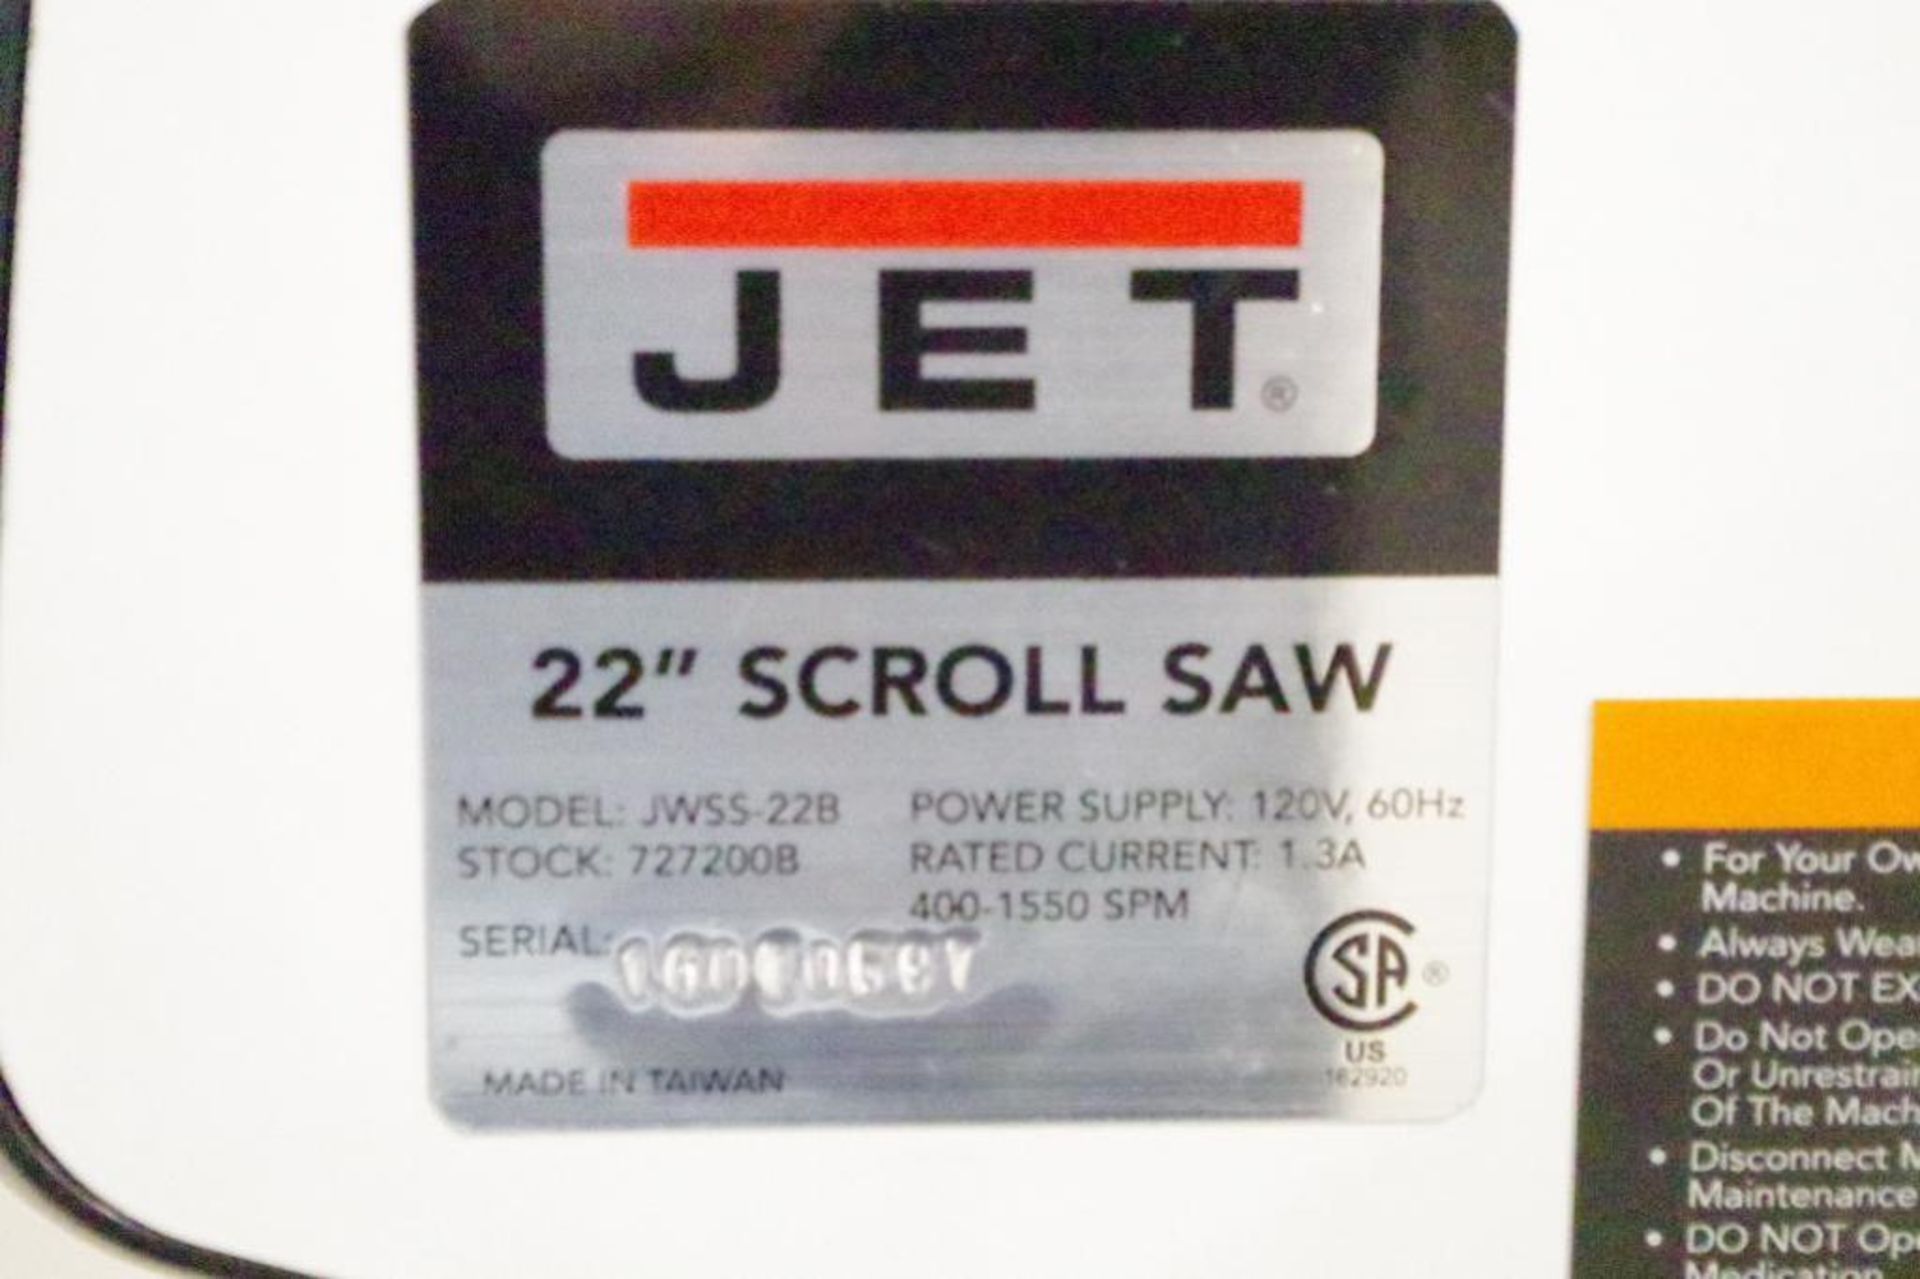 NEW JET 22" Scroll Saw w/ Foot Switch, M/N JWSS-22B - Image 2 of 4